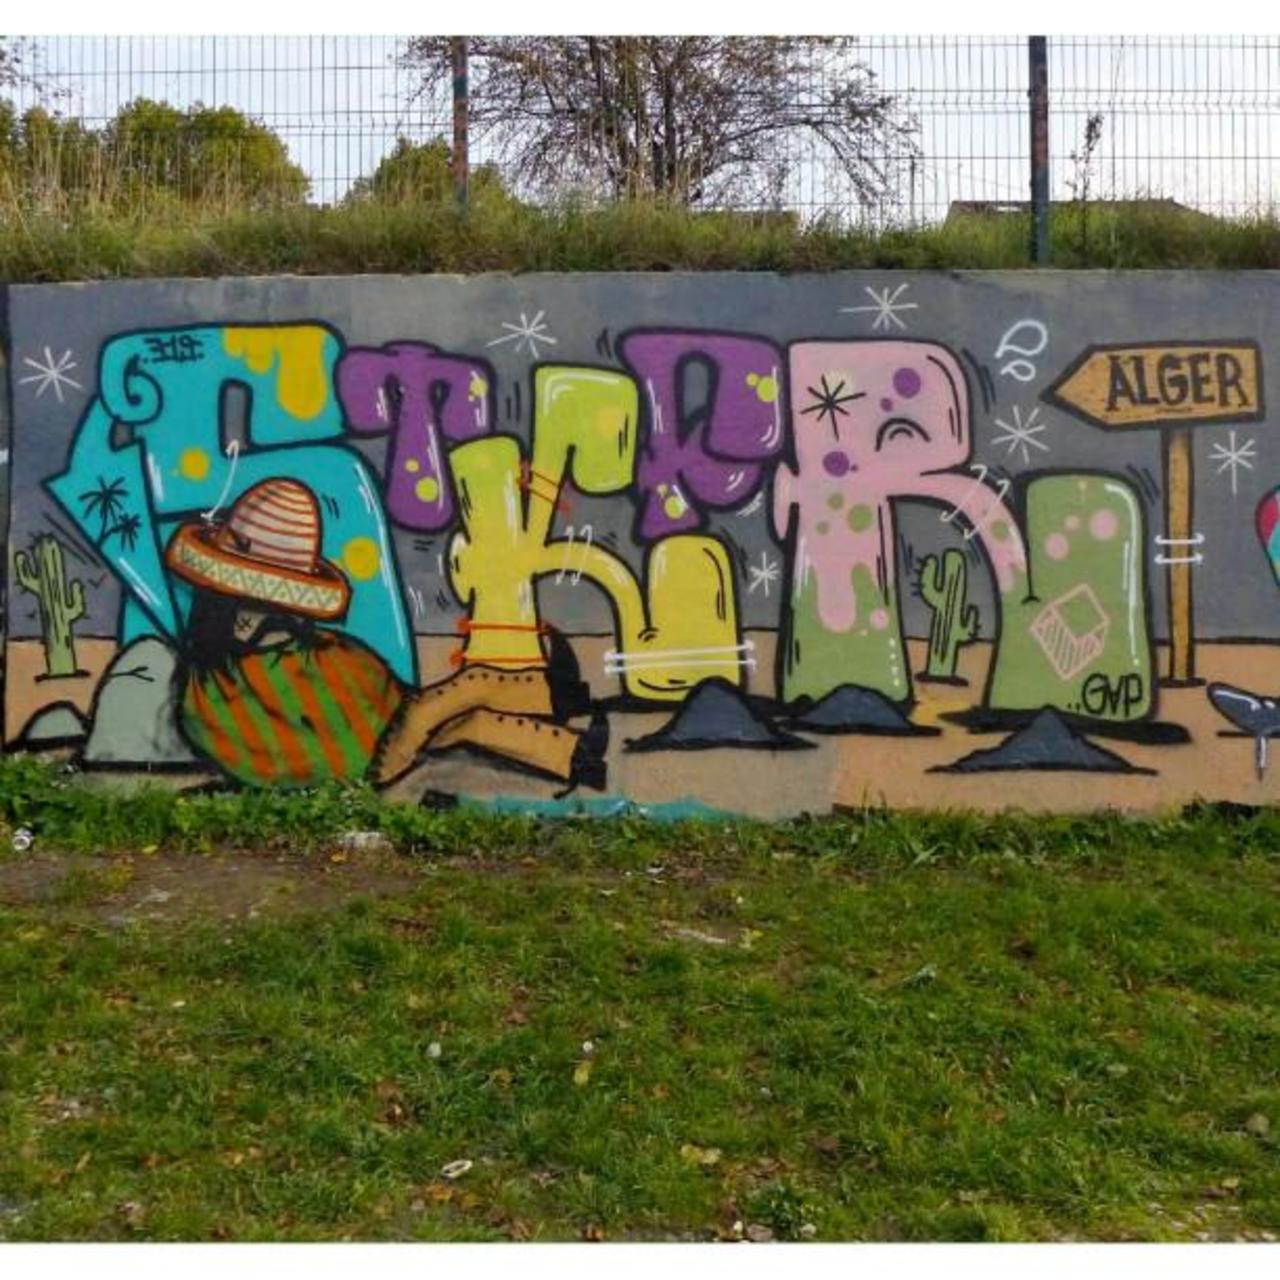 #Paris #graffiti photo by @maxdimontemarciano http://ift.tt/1L7zhIY #StreetArt http://t.co/Z9g7LIPT6a